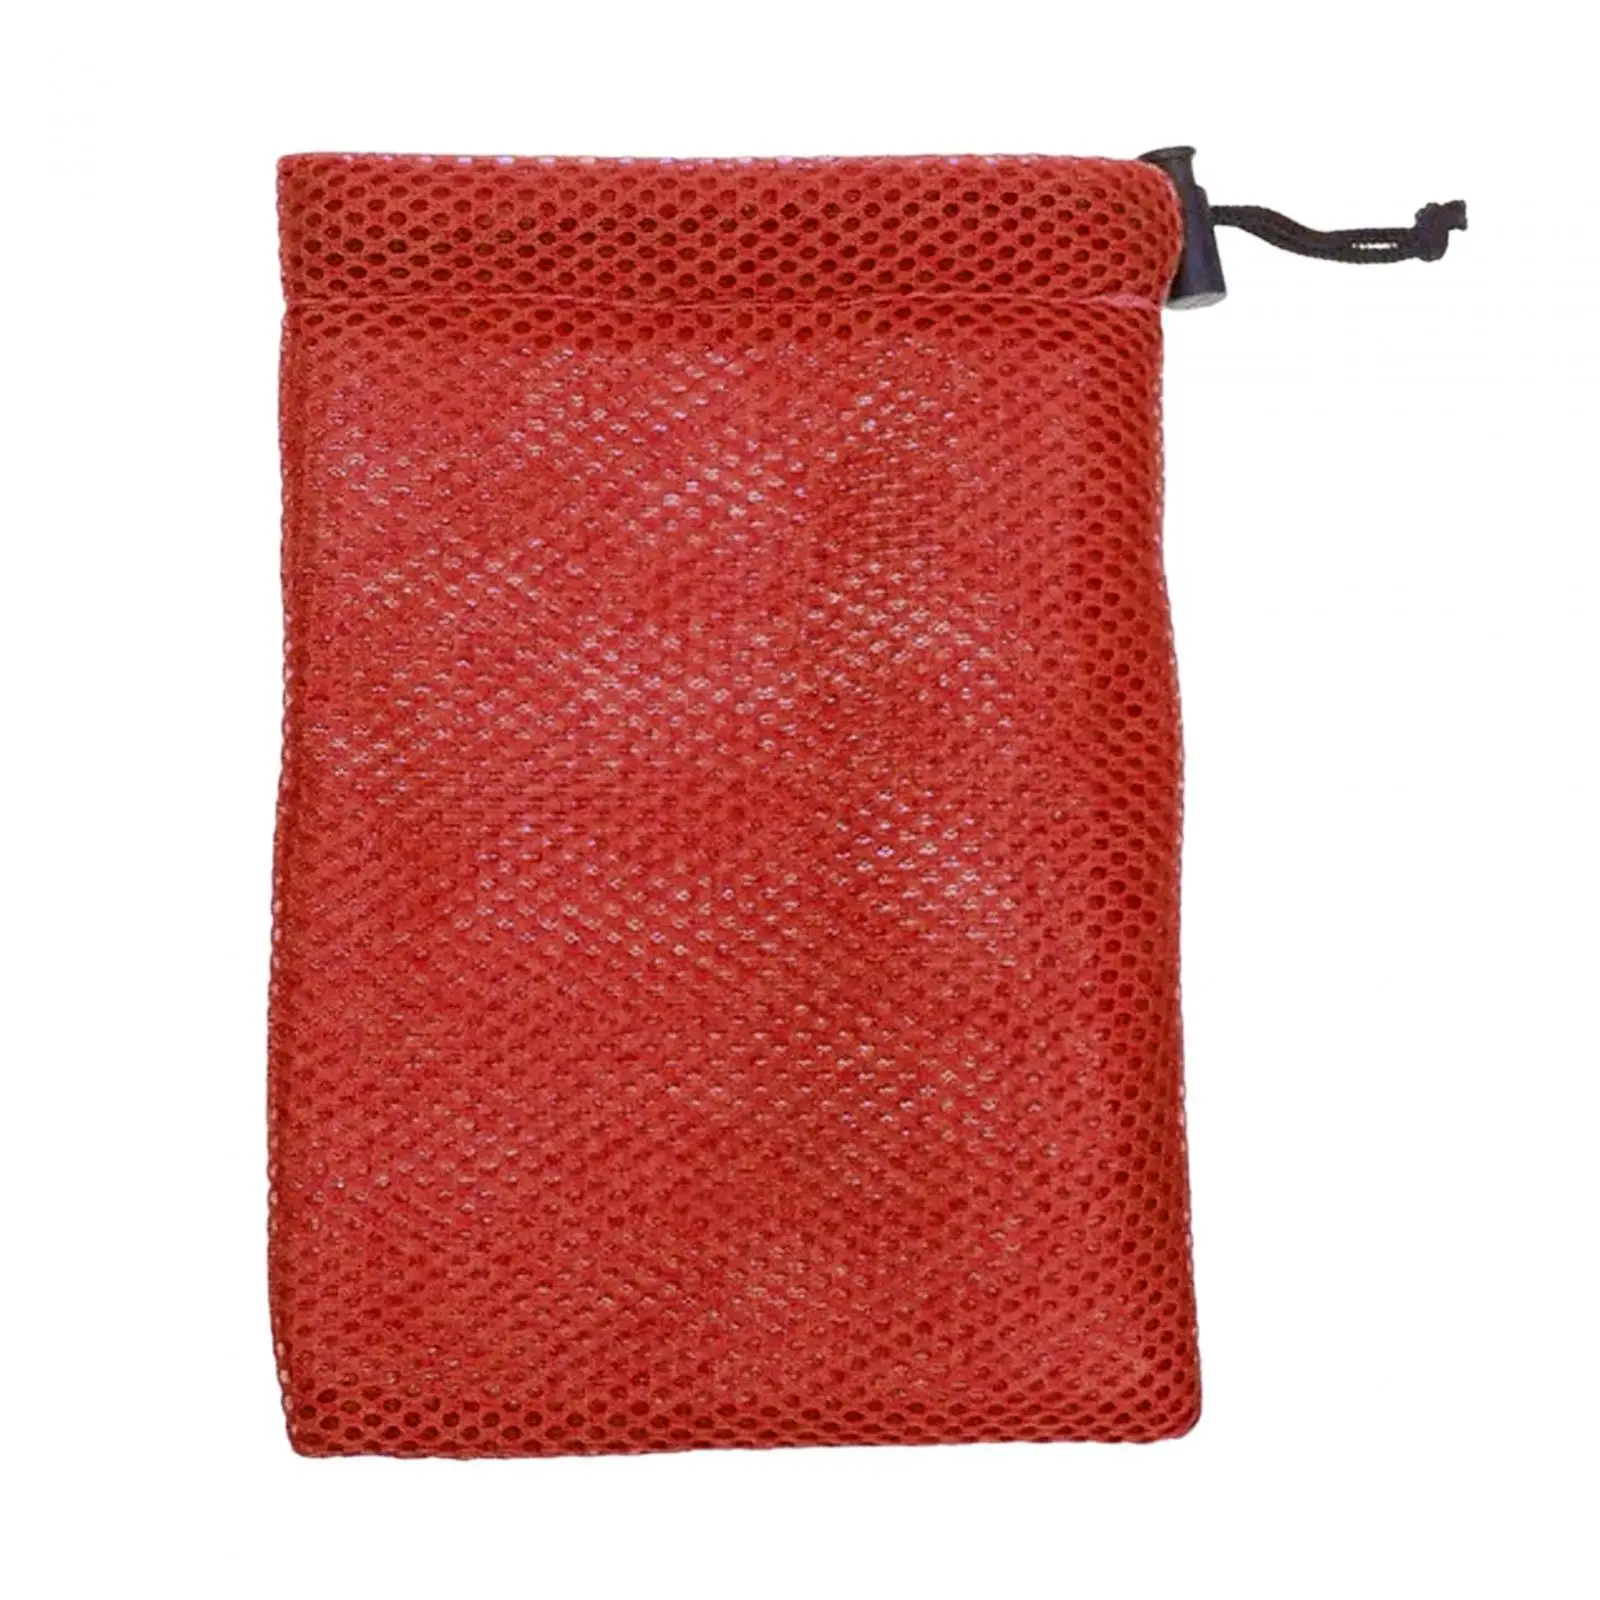 Small Mesh Drawstring Bag Durable Mesh Bag for Cosmetics Golf Balls Swimming